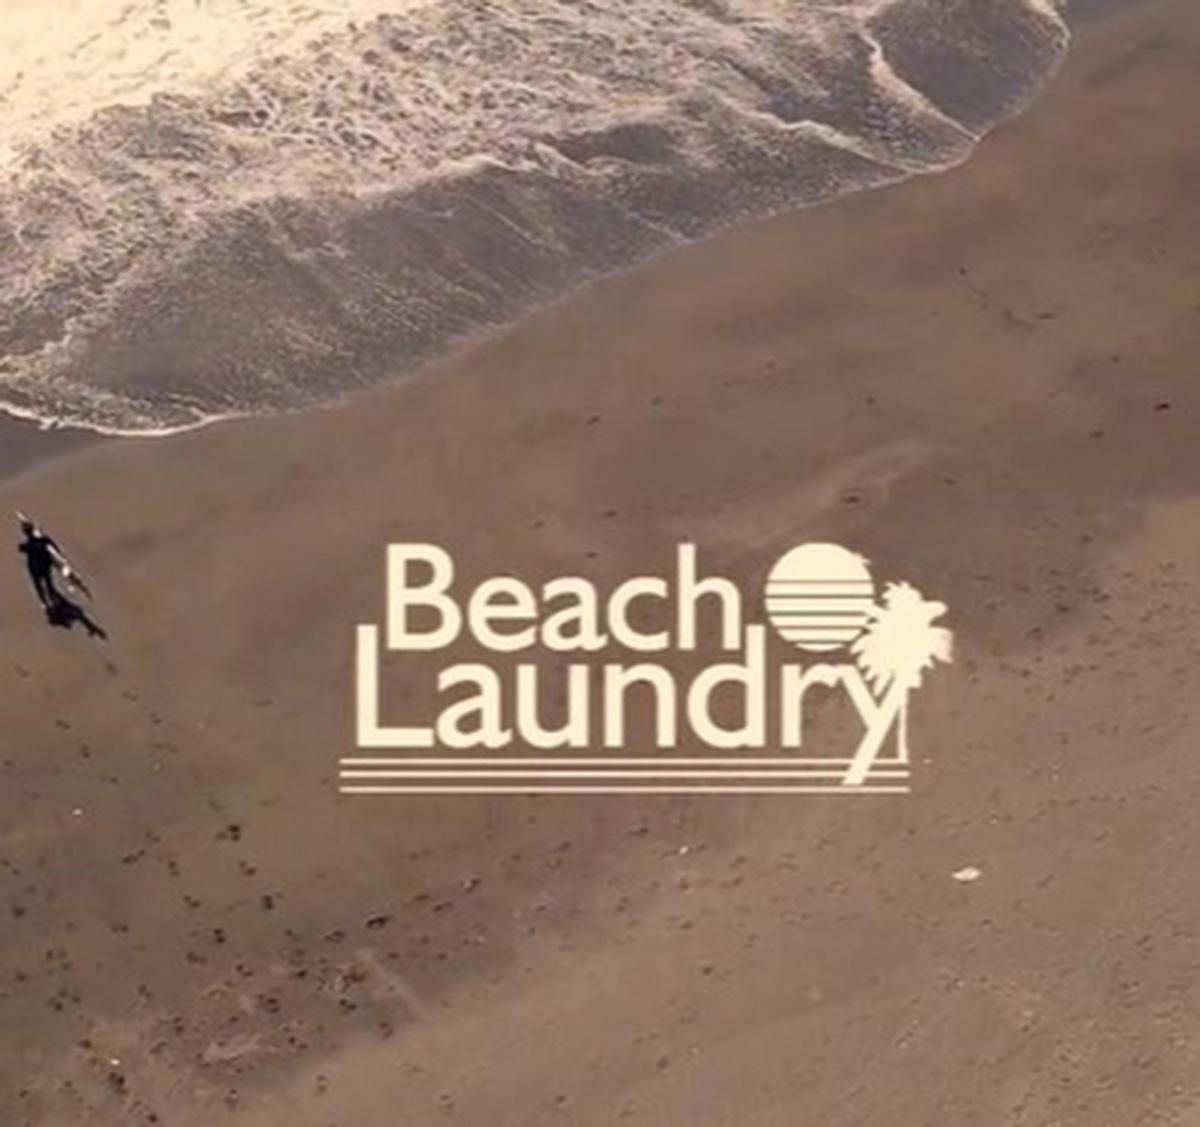 Beach Laundry ビーチランドリー ウェットシャンプー 柔軟剤入り WETSUITS SHAMPOO & SOFTNER ウエットスーツシャンプー 400ml